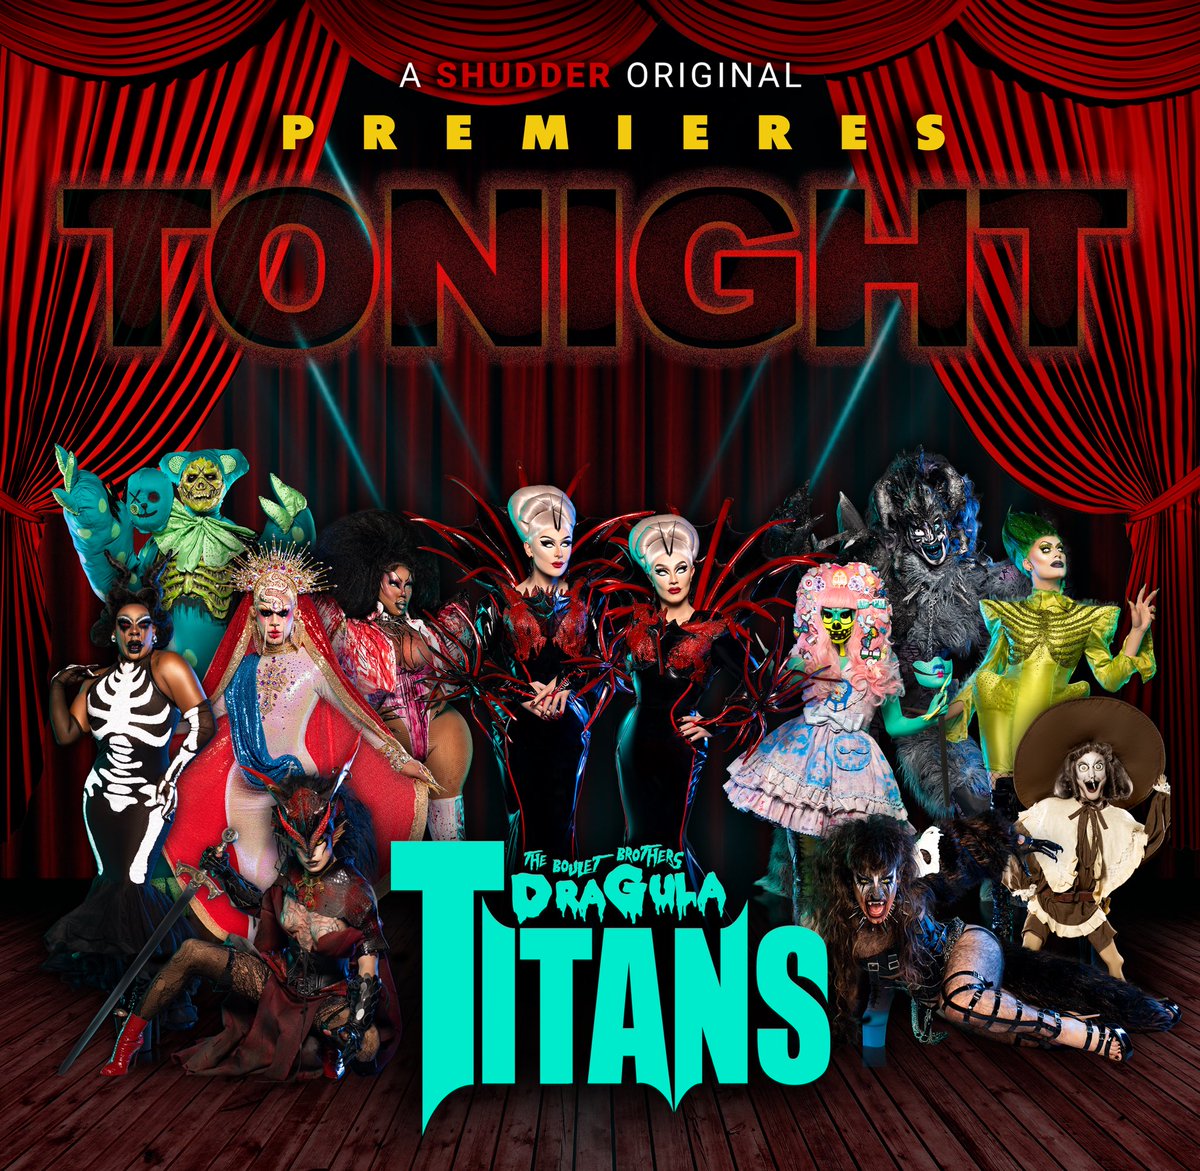 'The Boulet Brothers’ Dragula: Titans' Premieres Tonight! 9PM PST / 12AM ET on Shudder! #dragulatitans @bouletbrothers @AMC_TV @Shudder